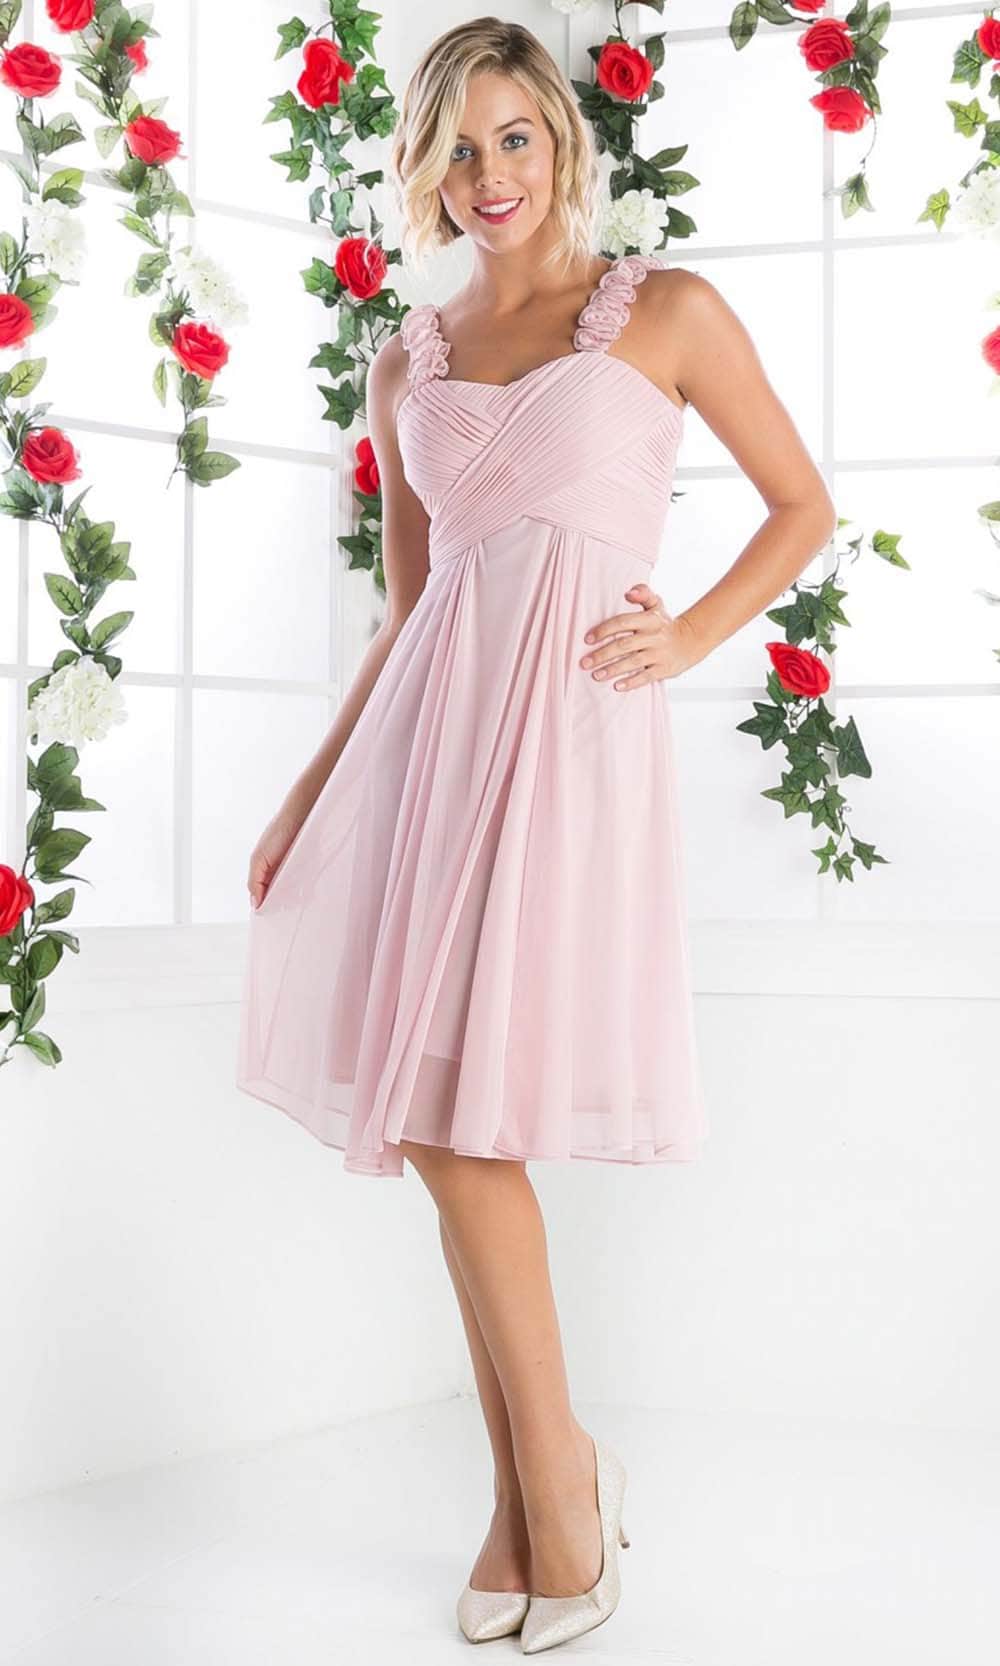 Image of Ladivine 3801 - Floral Strap Empire Waist A-Line Dress